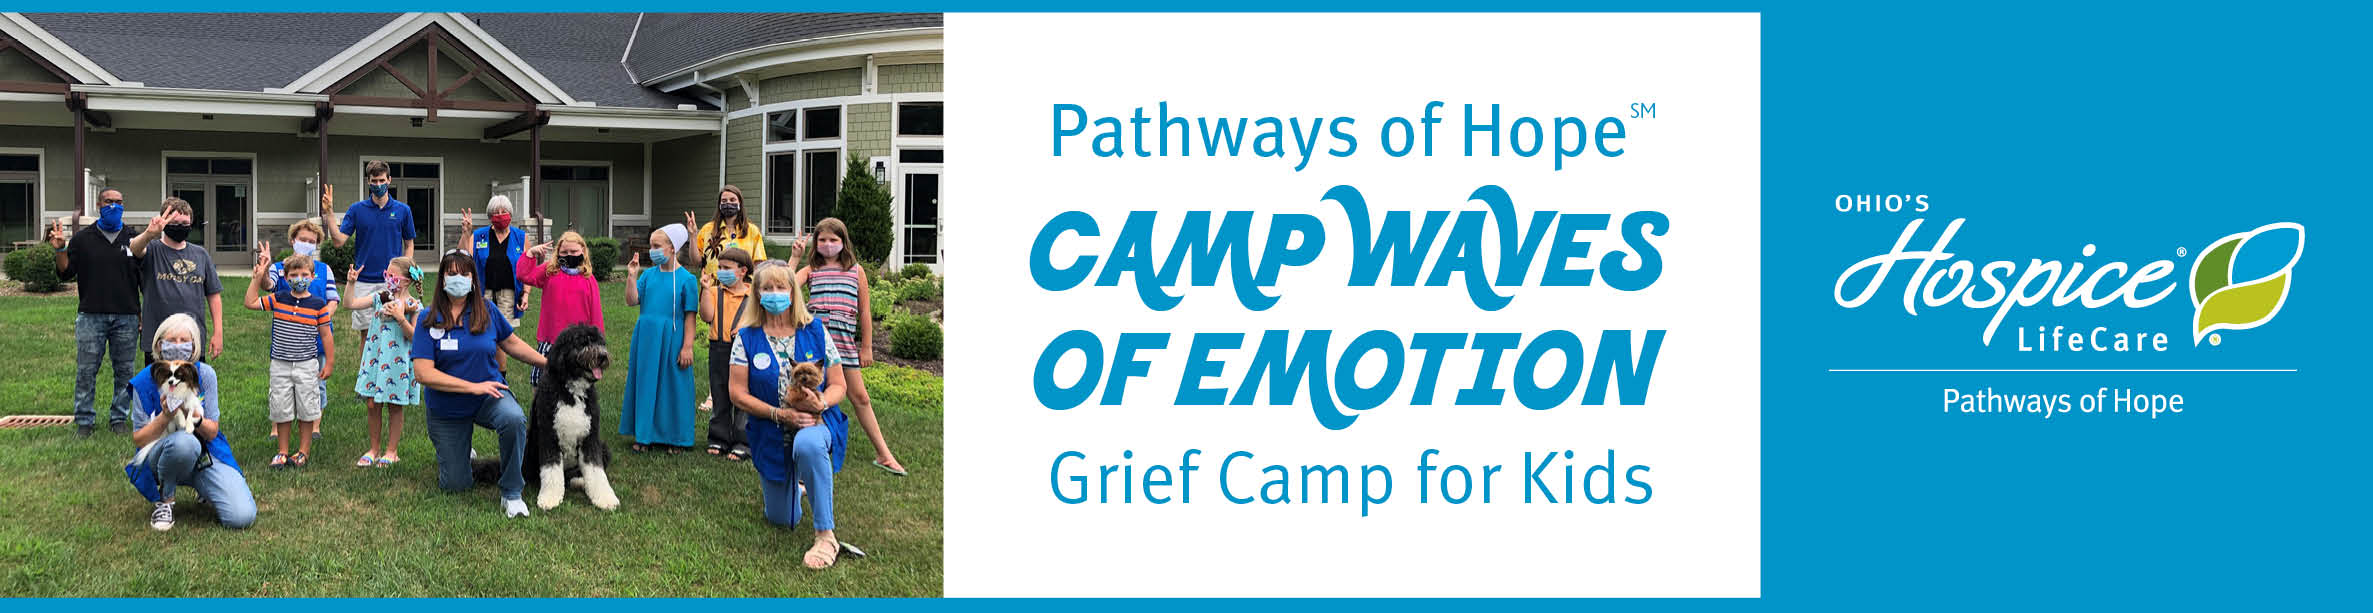 Pathways of Hope Camp Waves of Emotion Grief Camp for Kids 2022